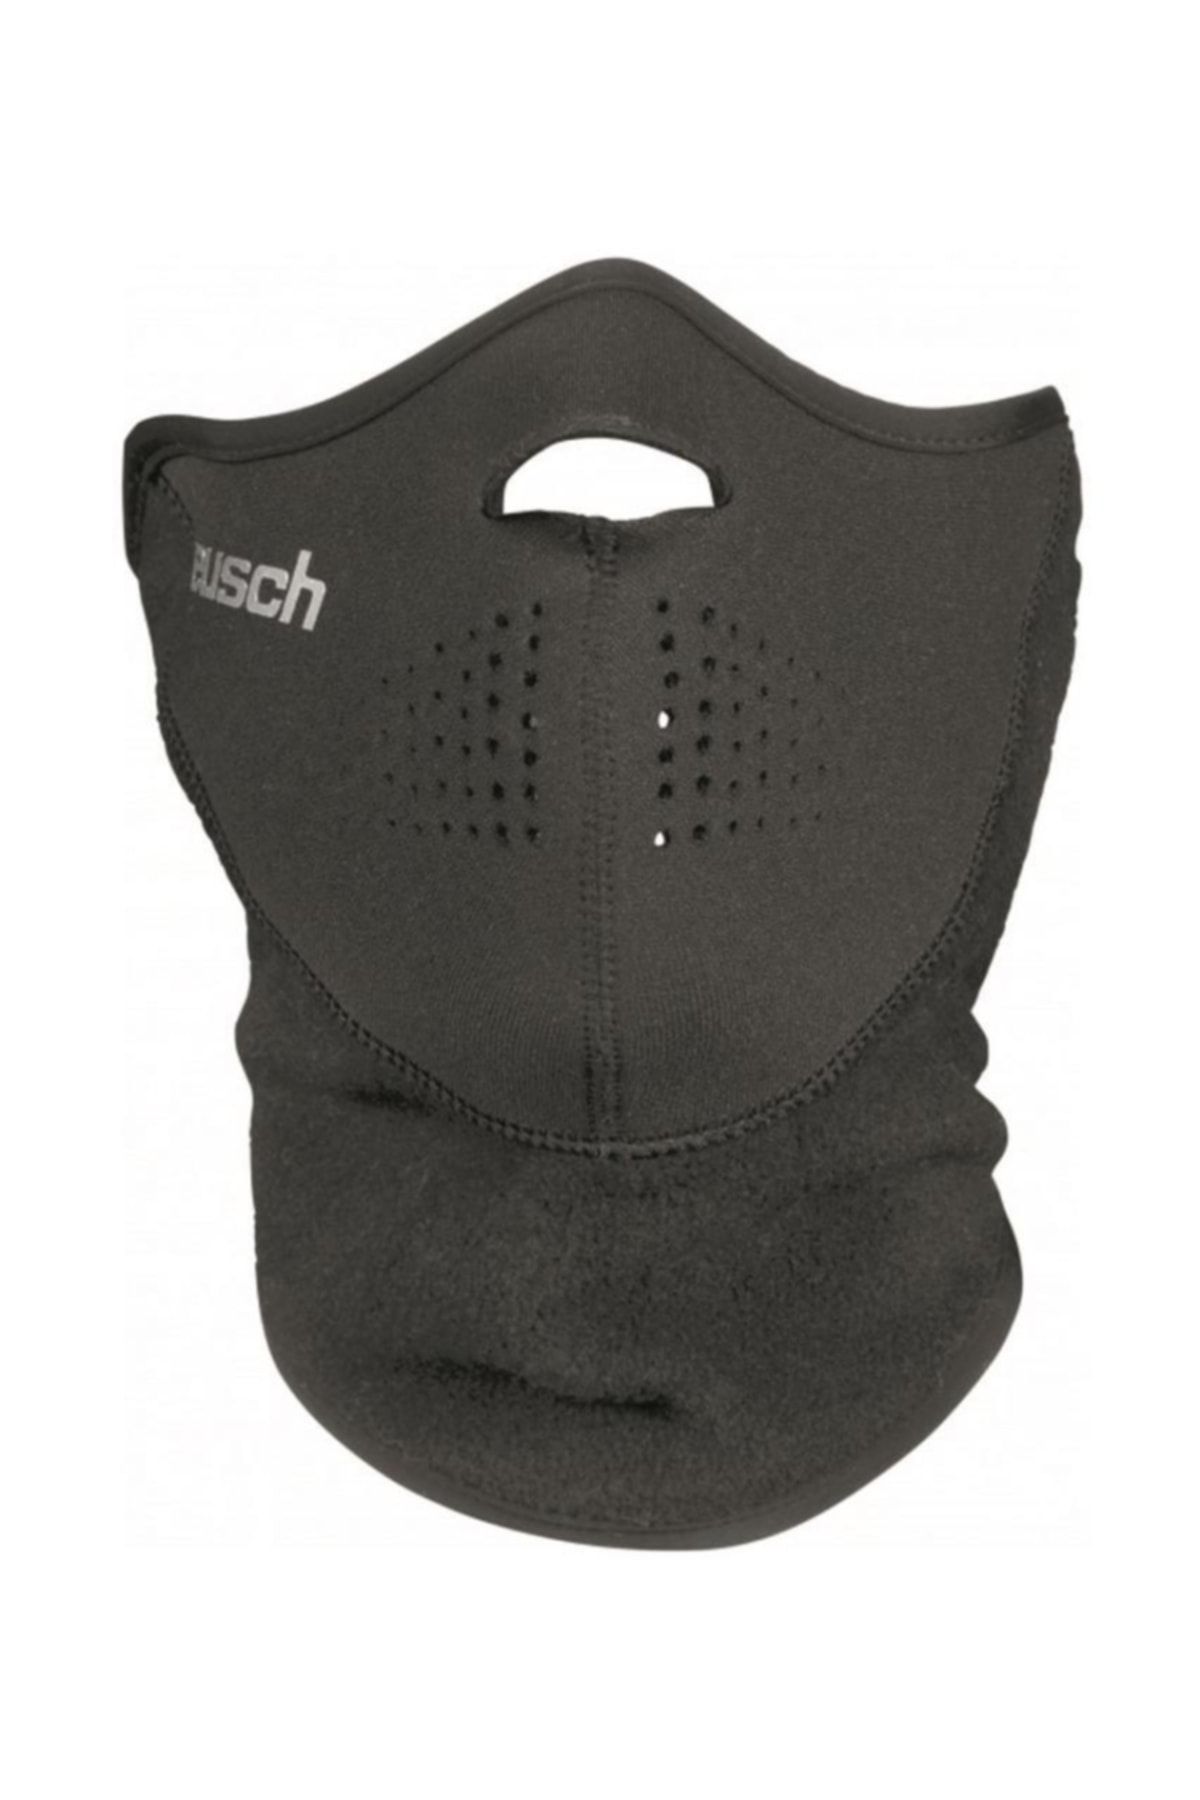 Reusch Unisex Face Mask Adjustable Maske Siyah